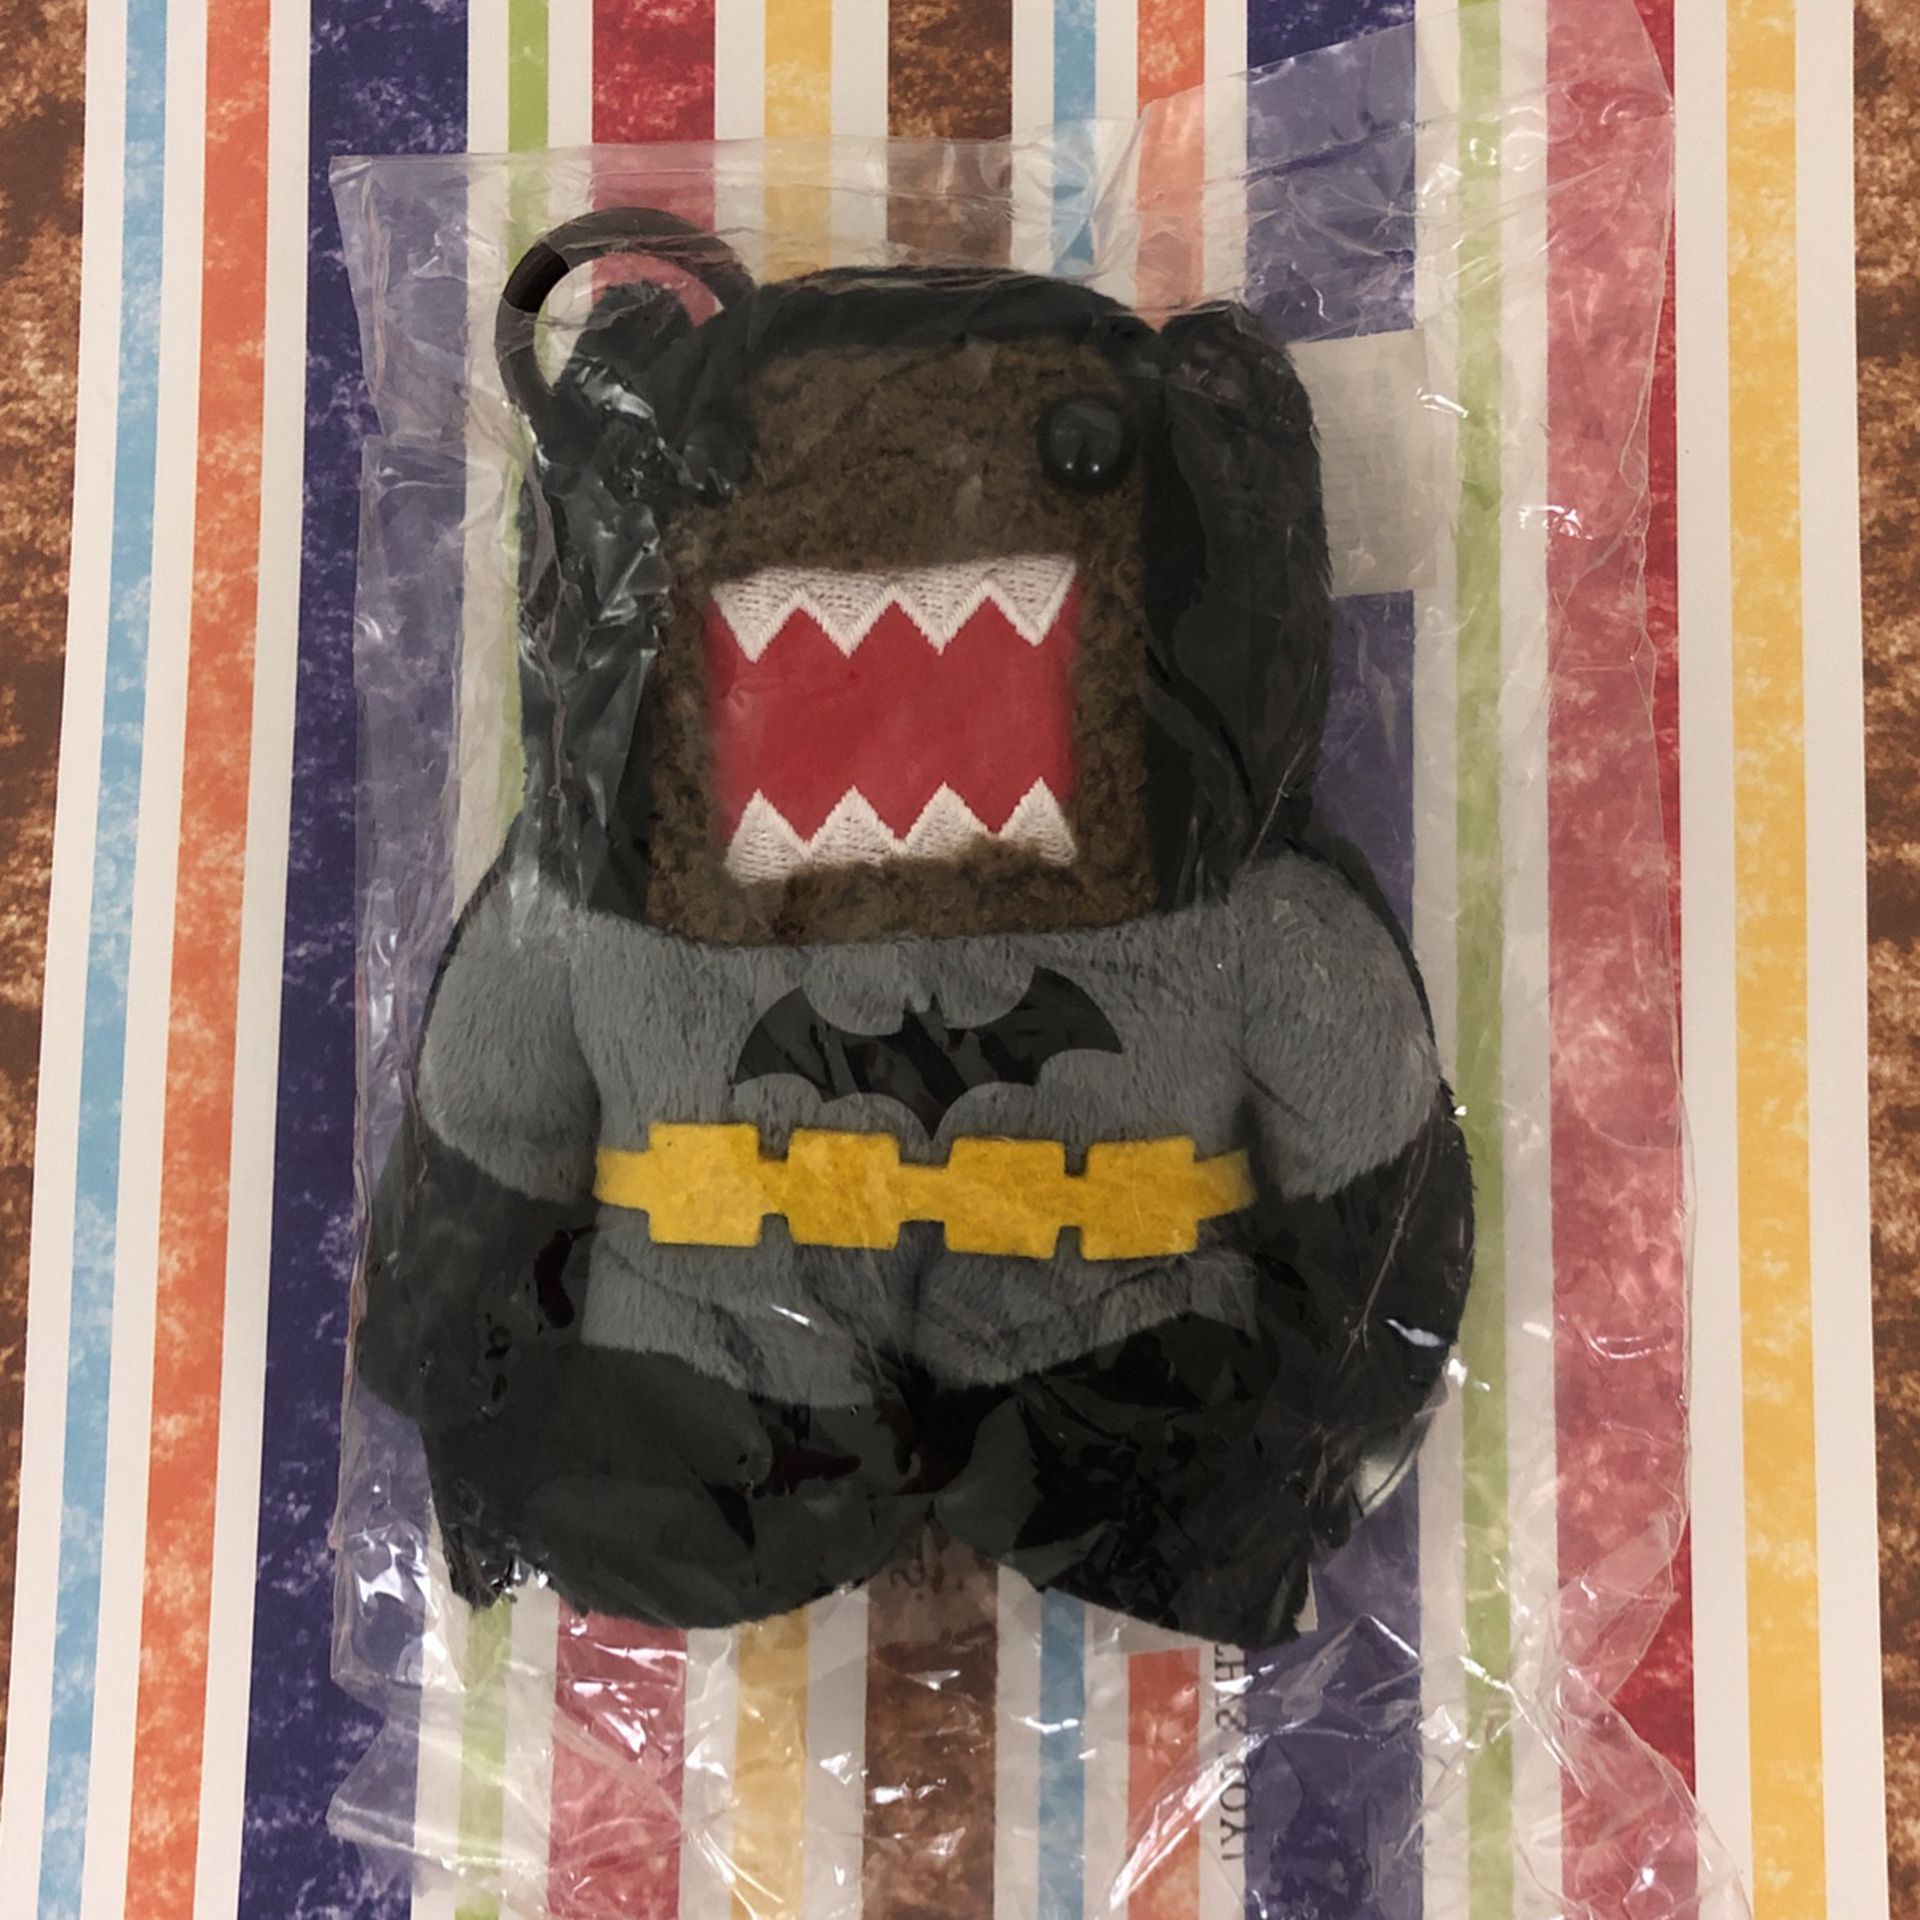 Domo Plush Batman Backpack Toy With Caribiner